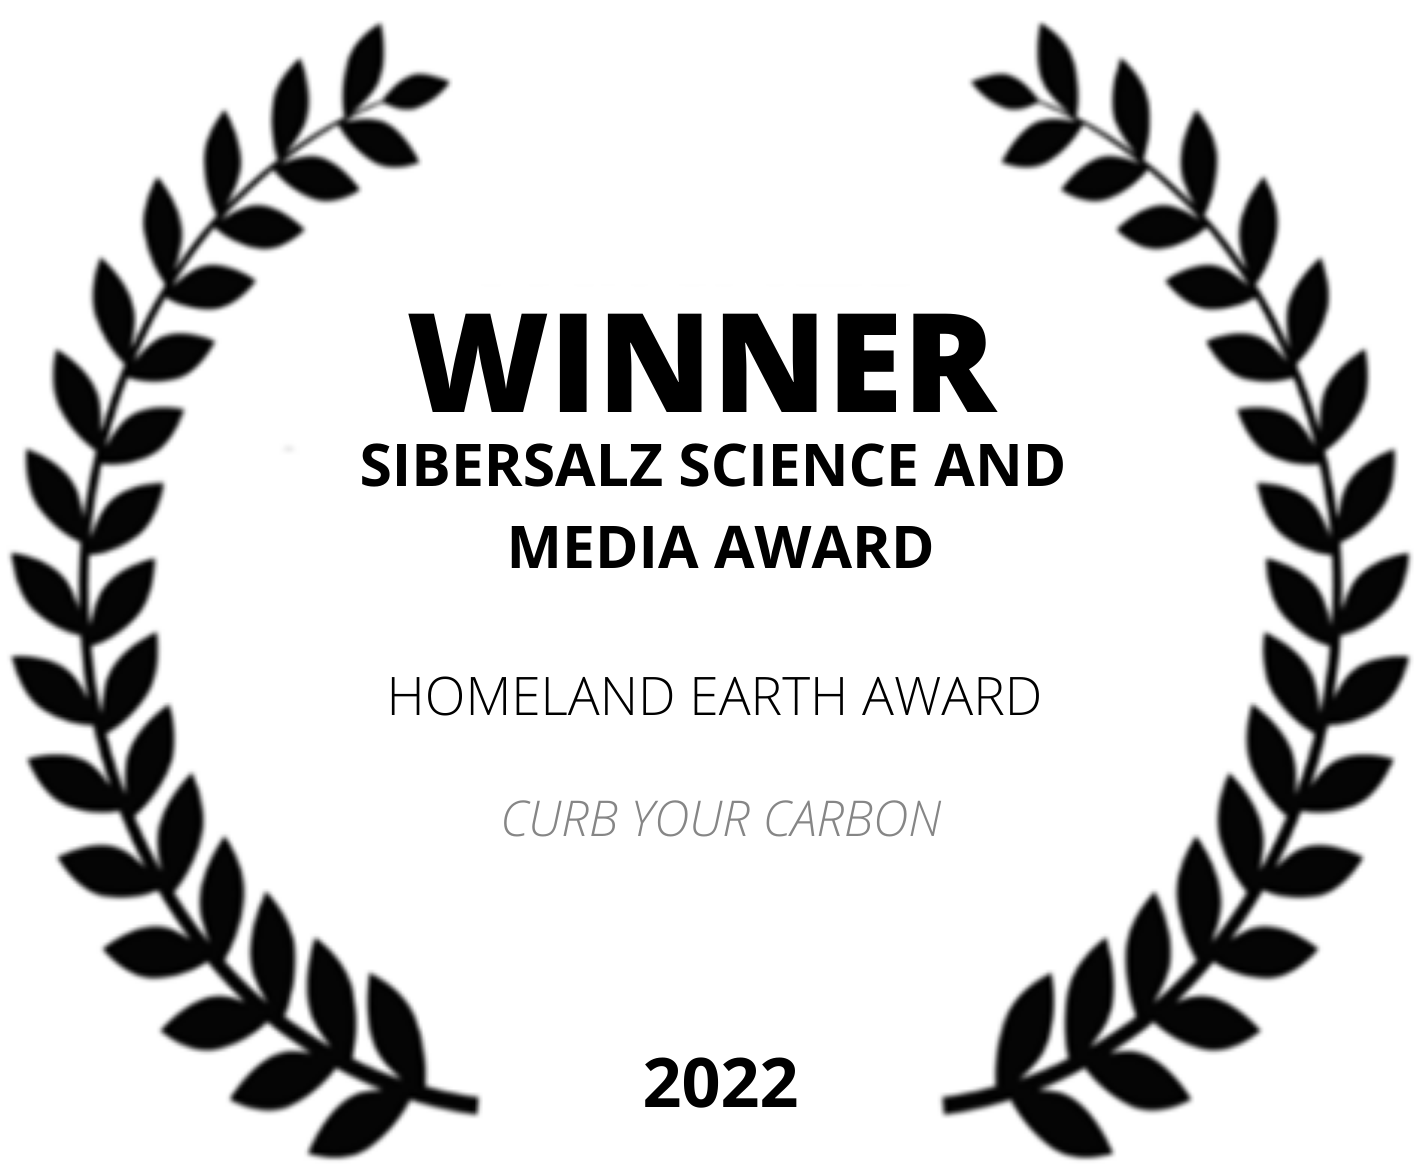 SIBERSALZ SCIENCE AND MEDIA AWARD.png